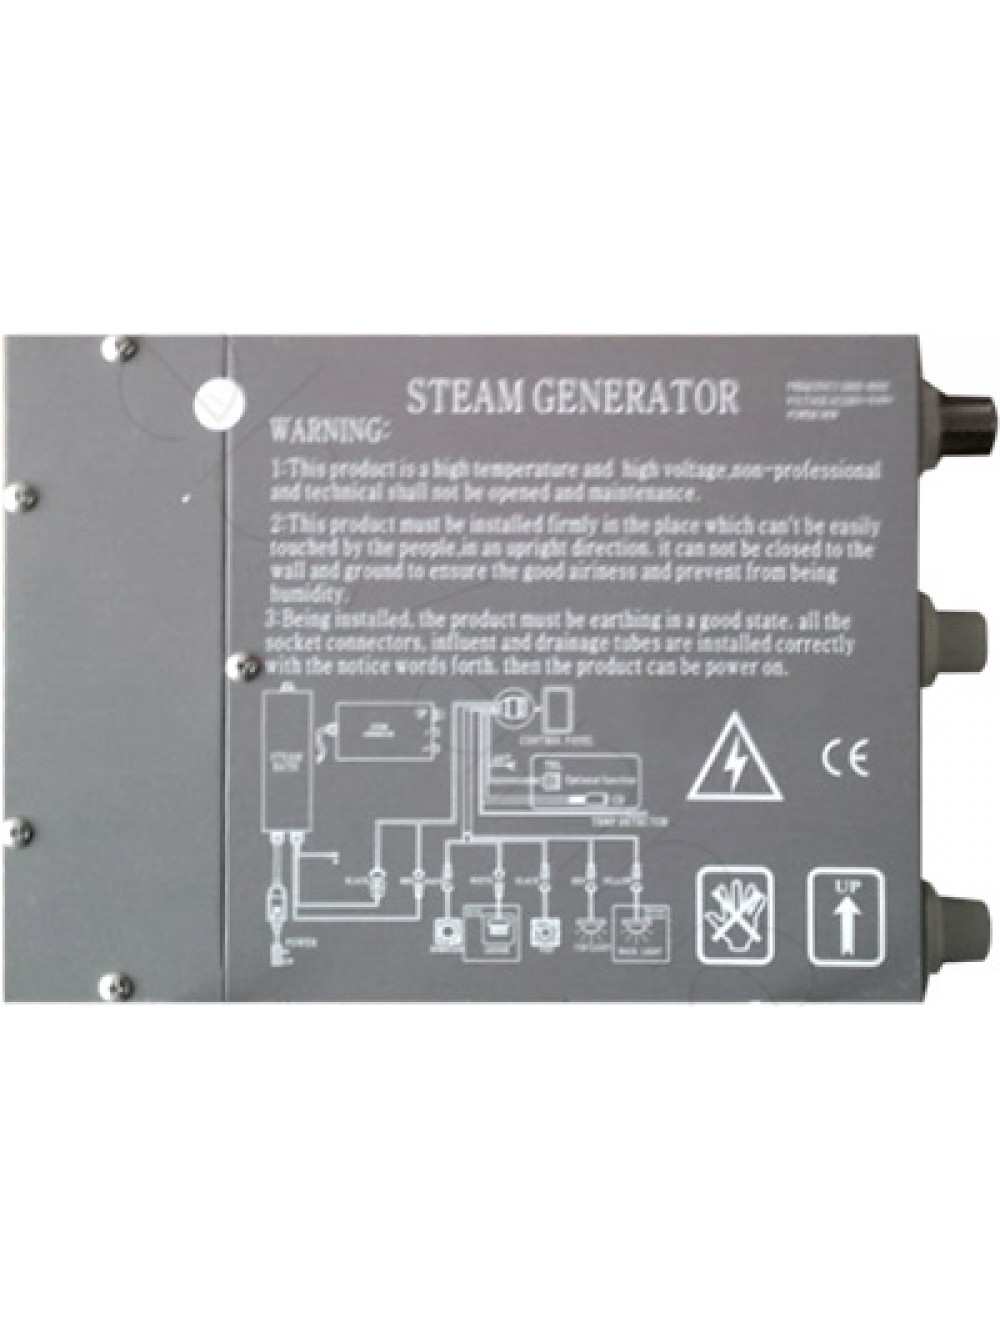 Steam generator инструкция фото 14